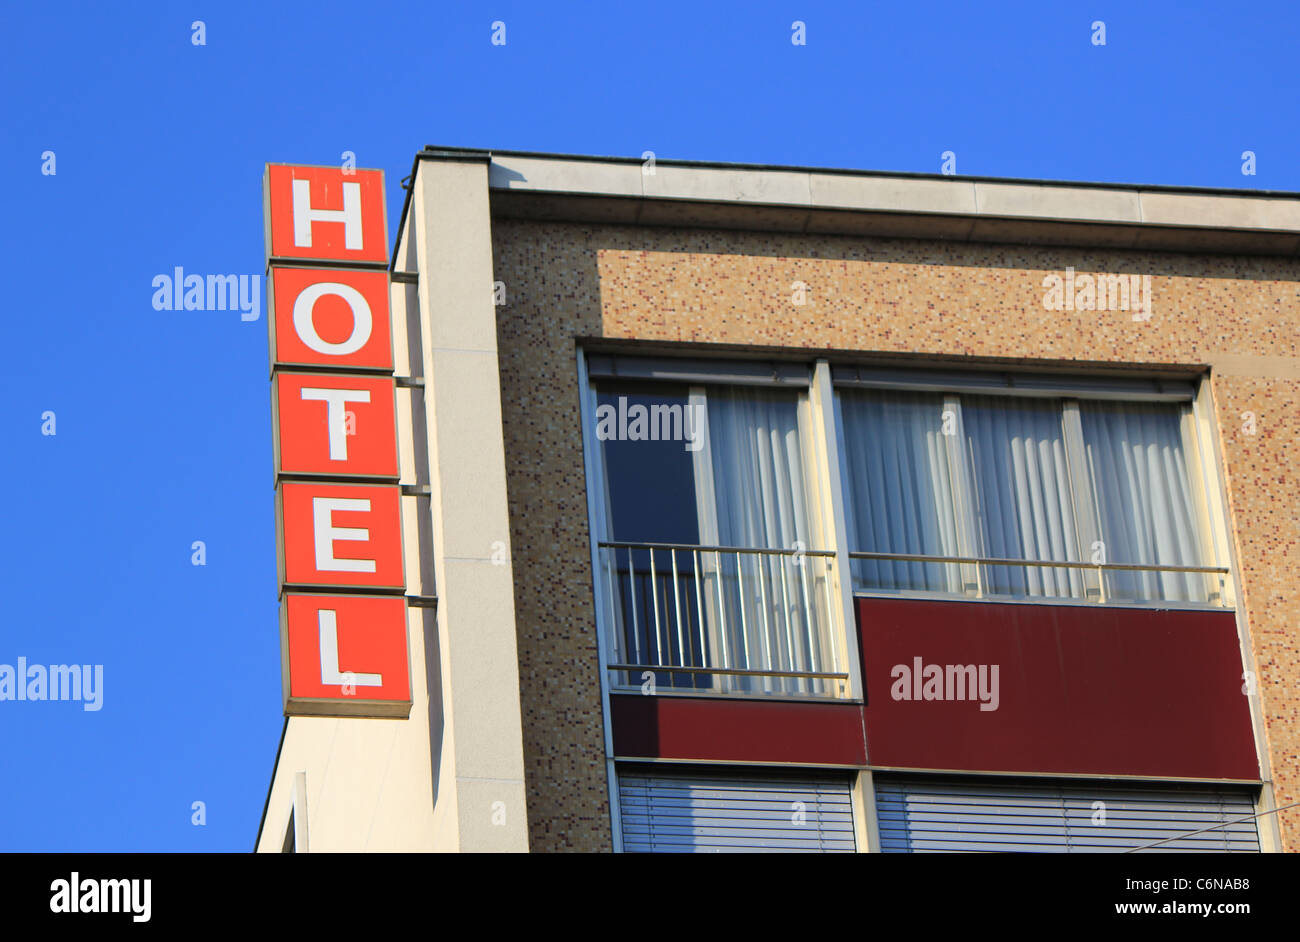 Hotel orange sign Stock Photo